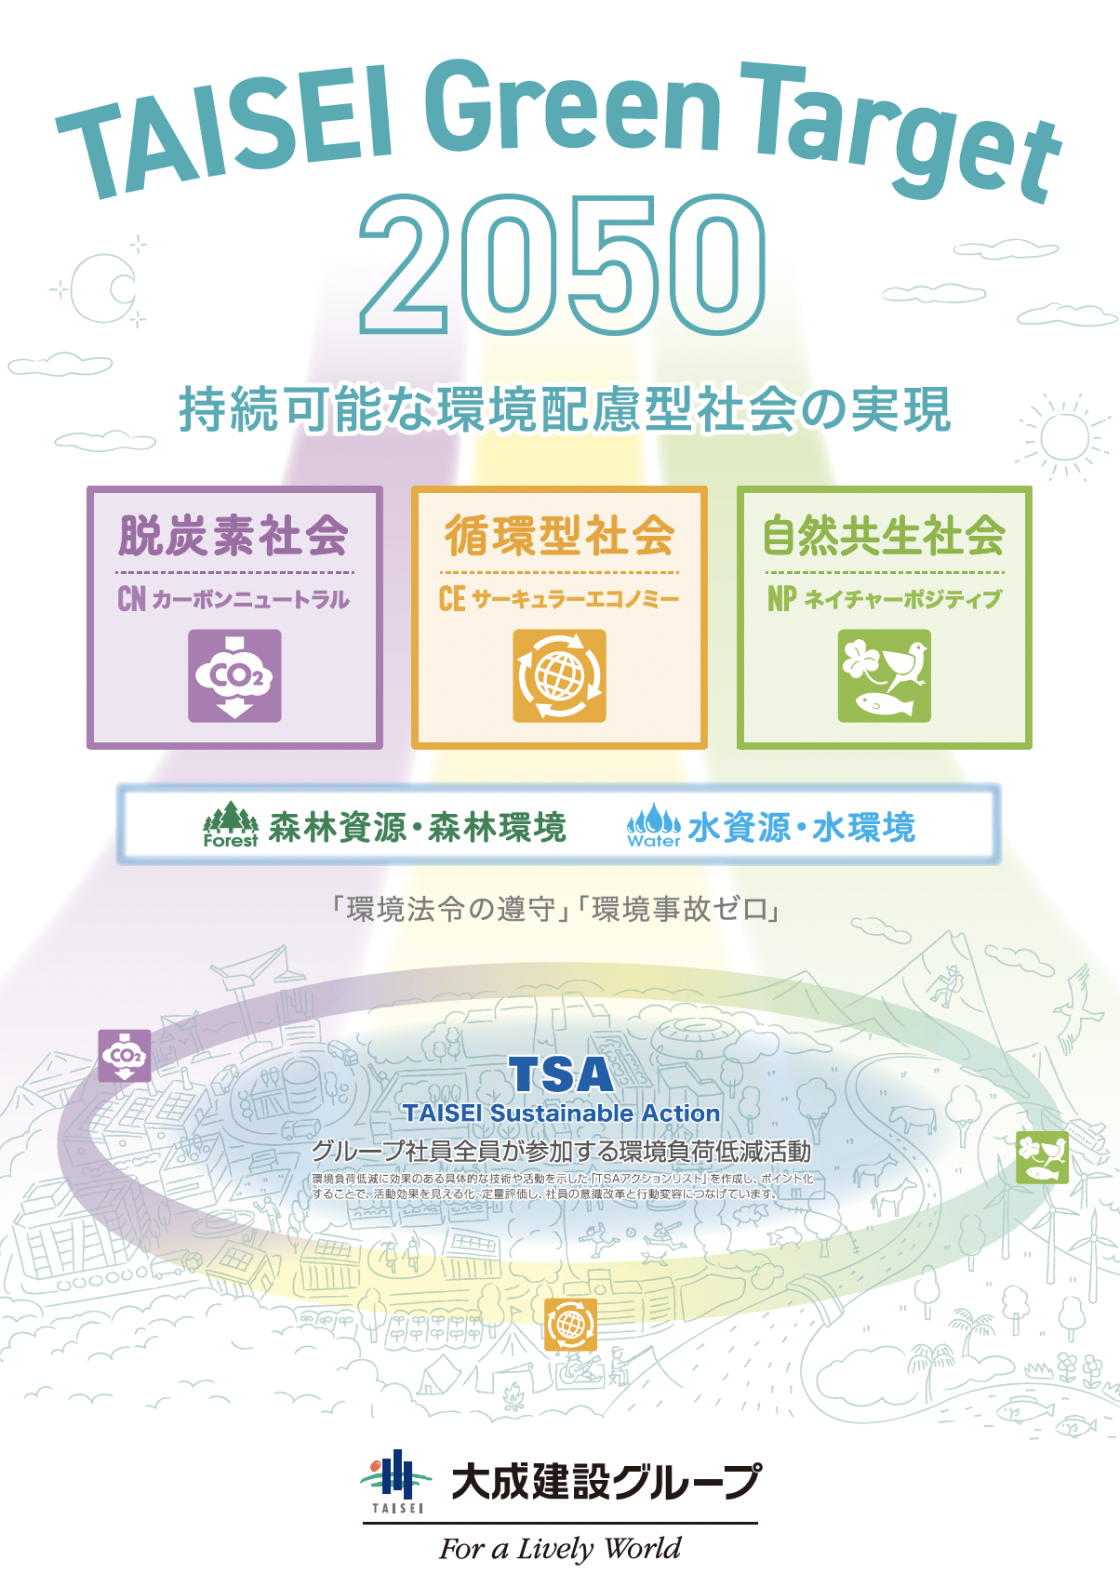 大成建設グループ長期環境目標「TAISEI Green Target 2050」